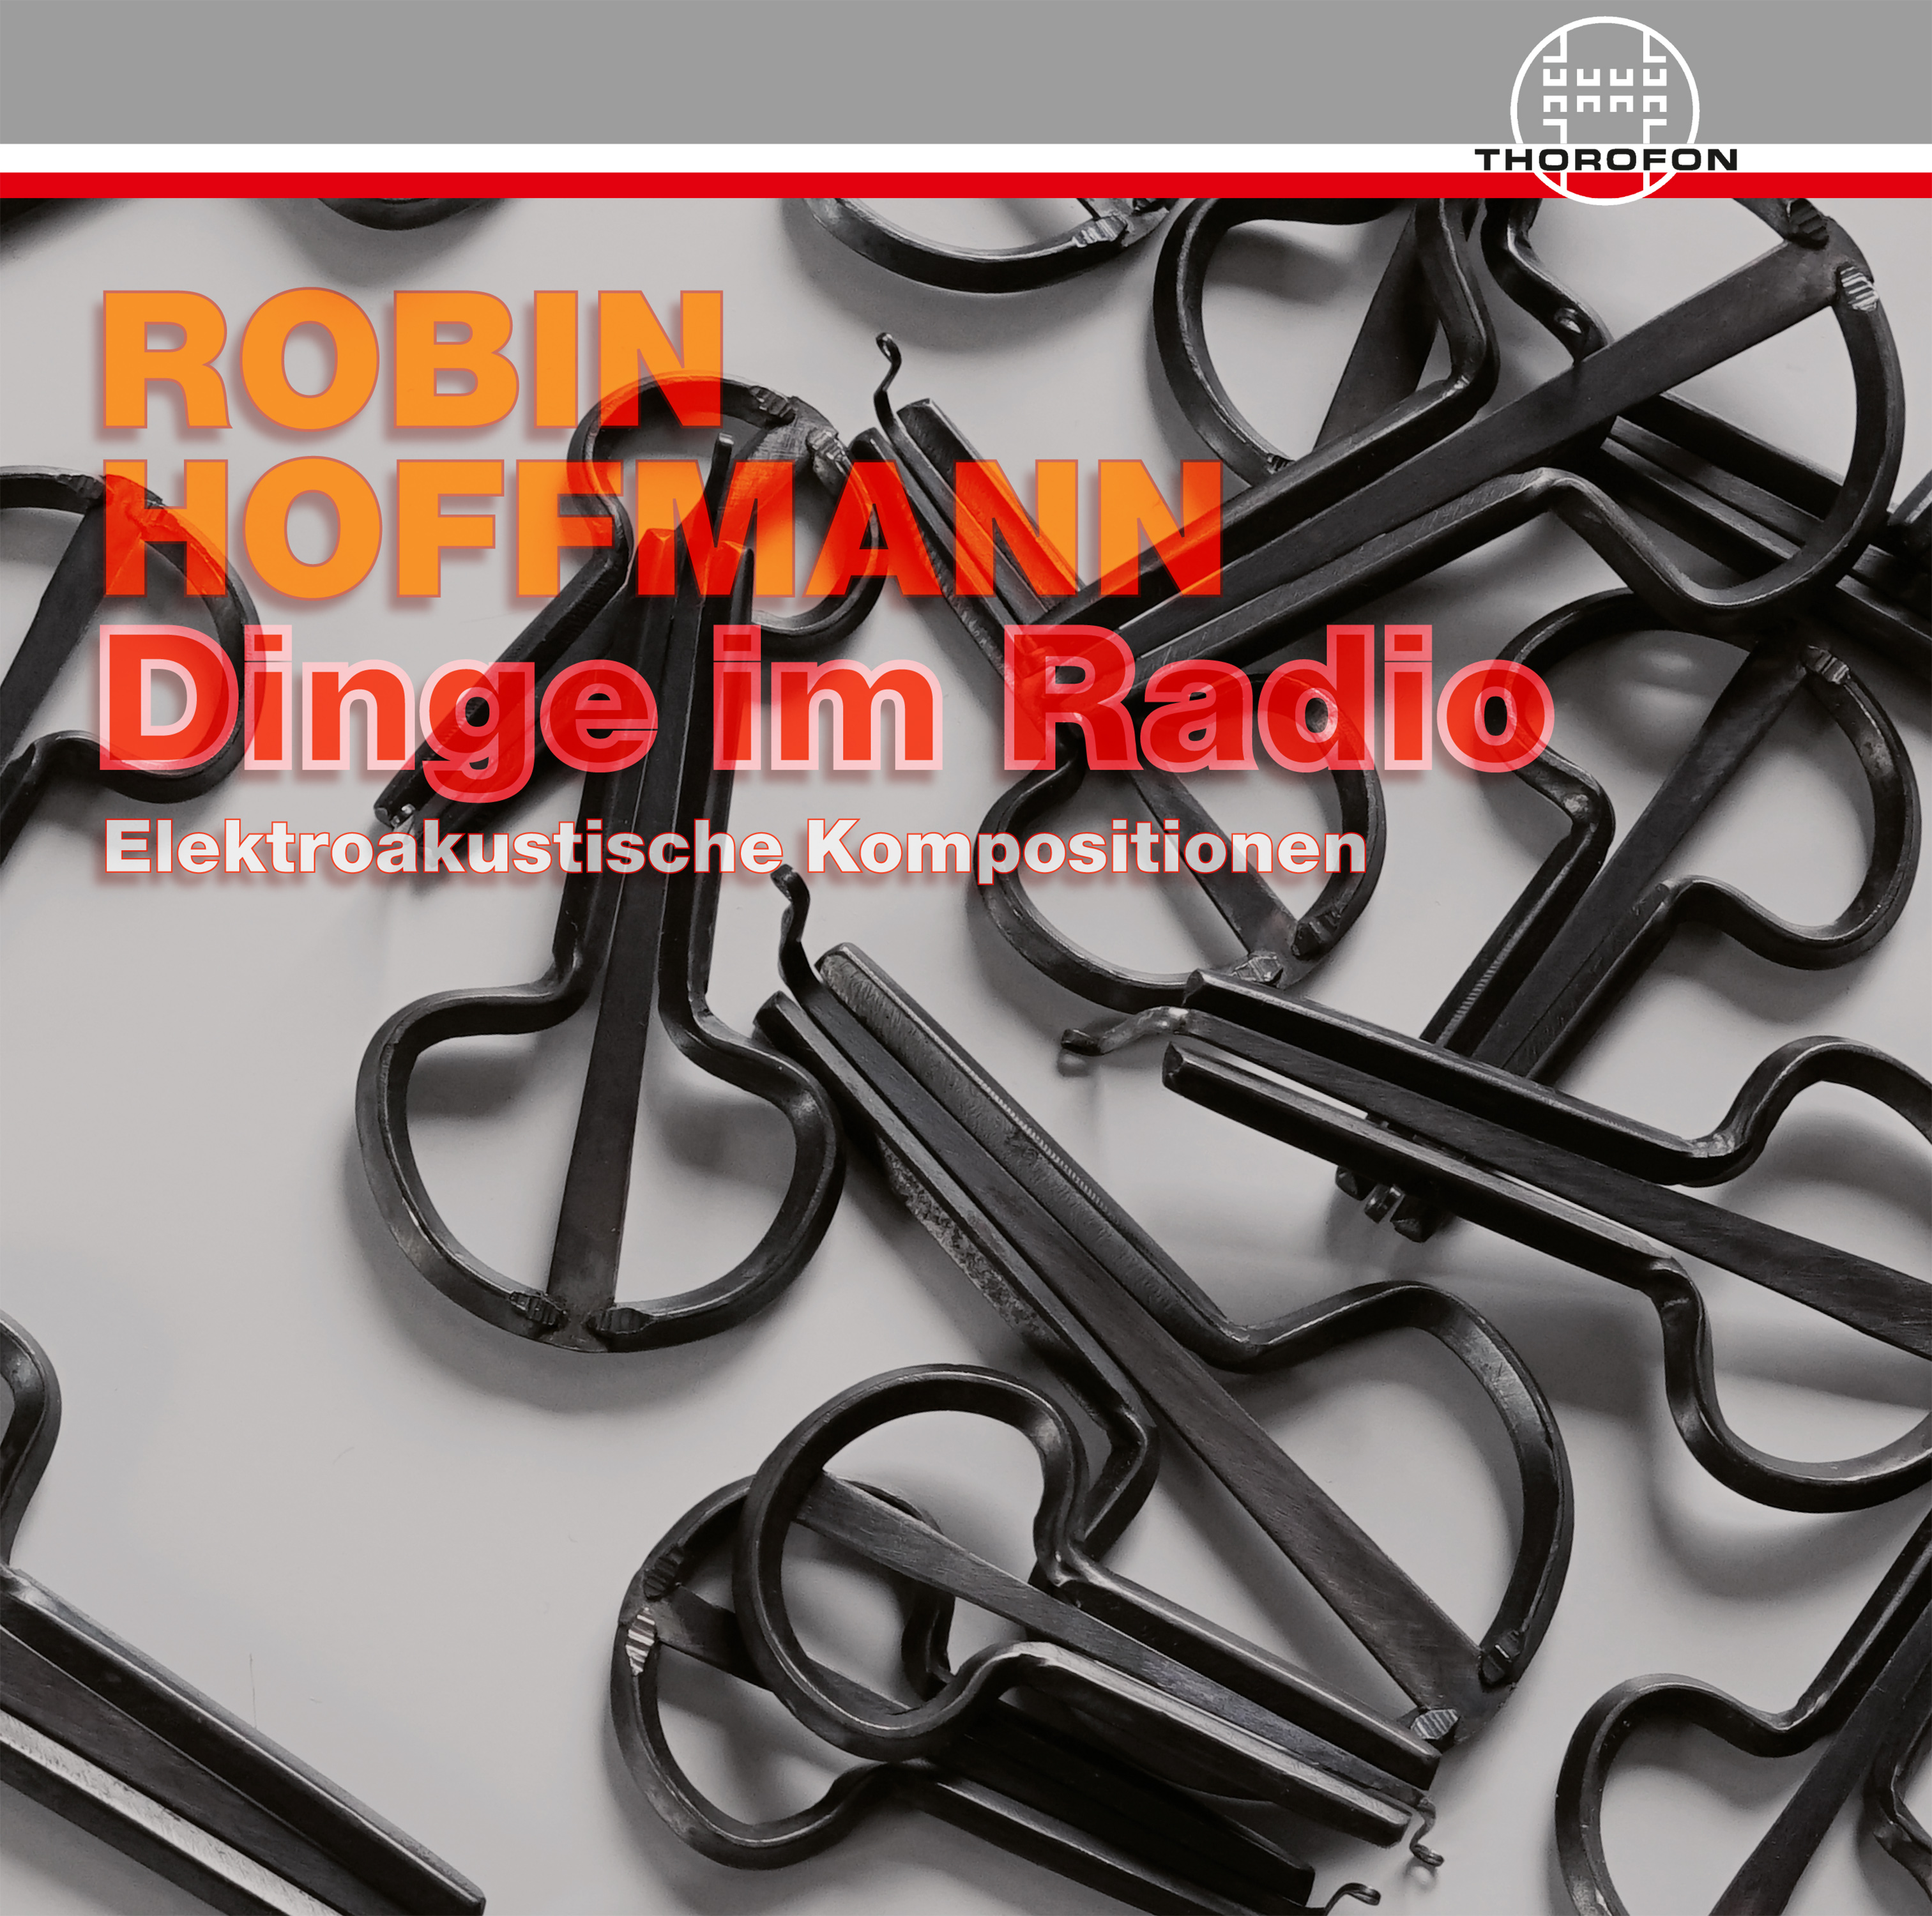 Dinge_im_Radio_Booklet_Cover